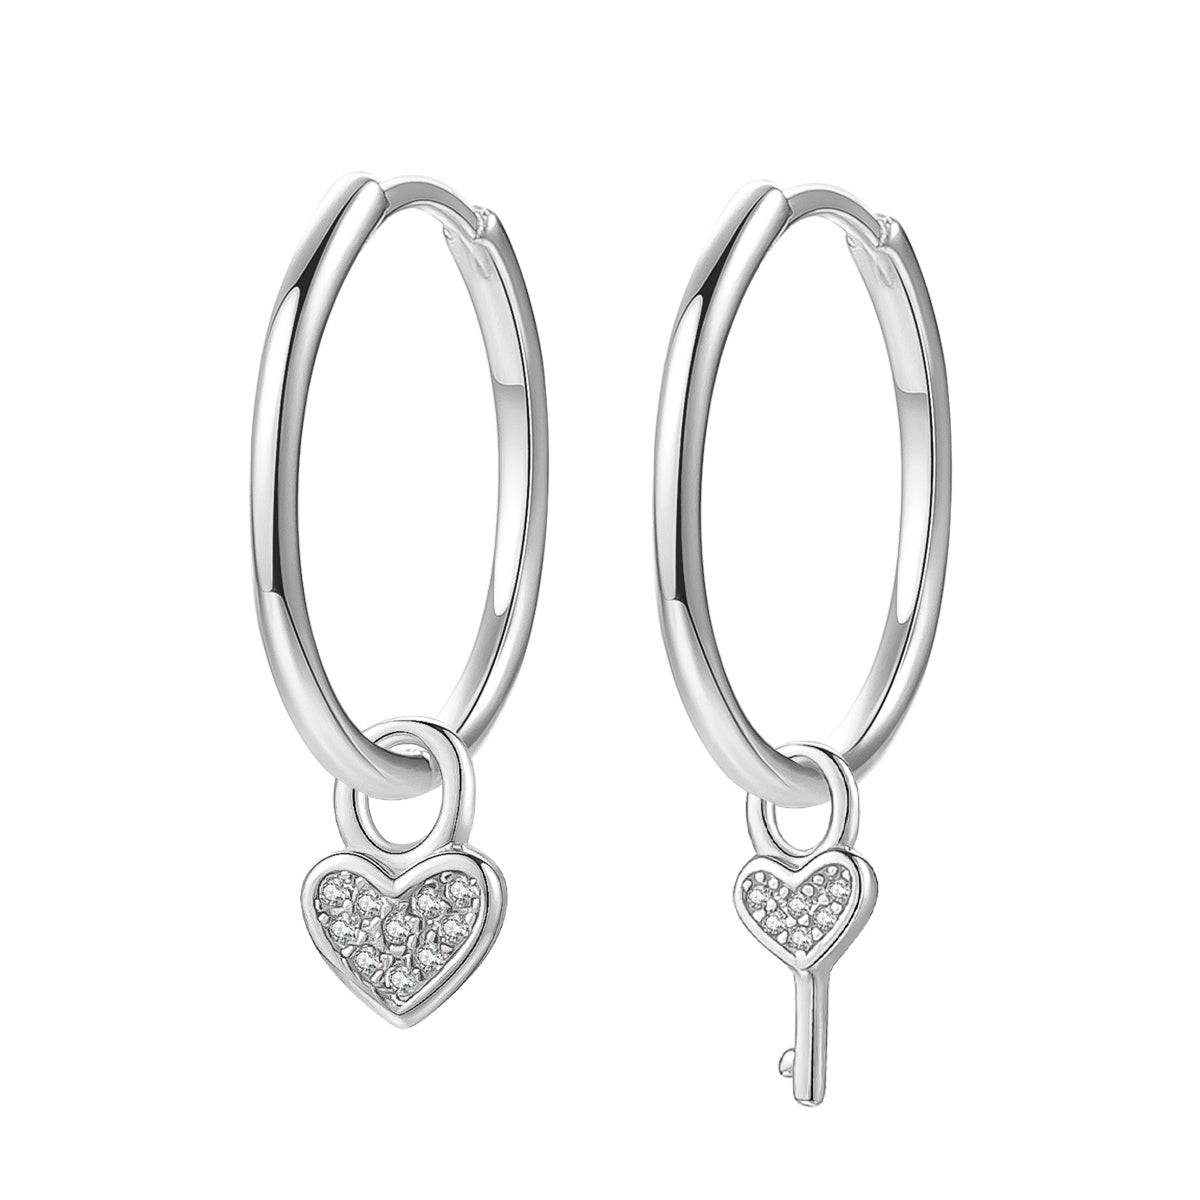 Heart and Key Charm Hoop Earrings Sterling Silver